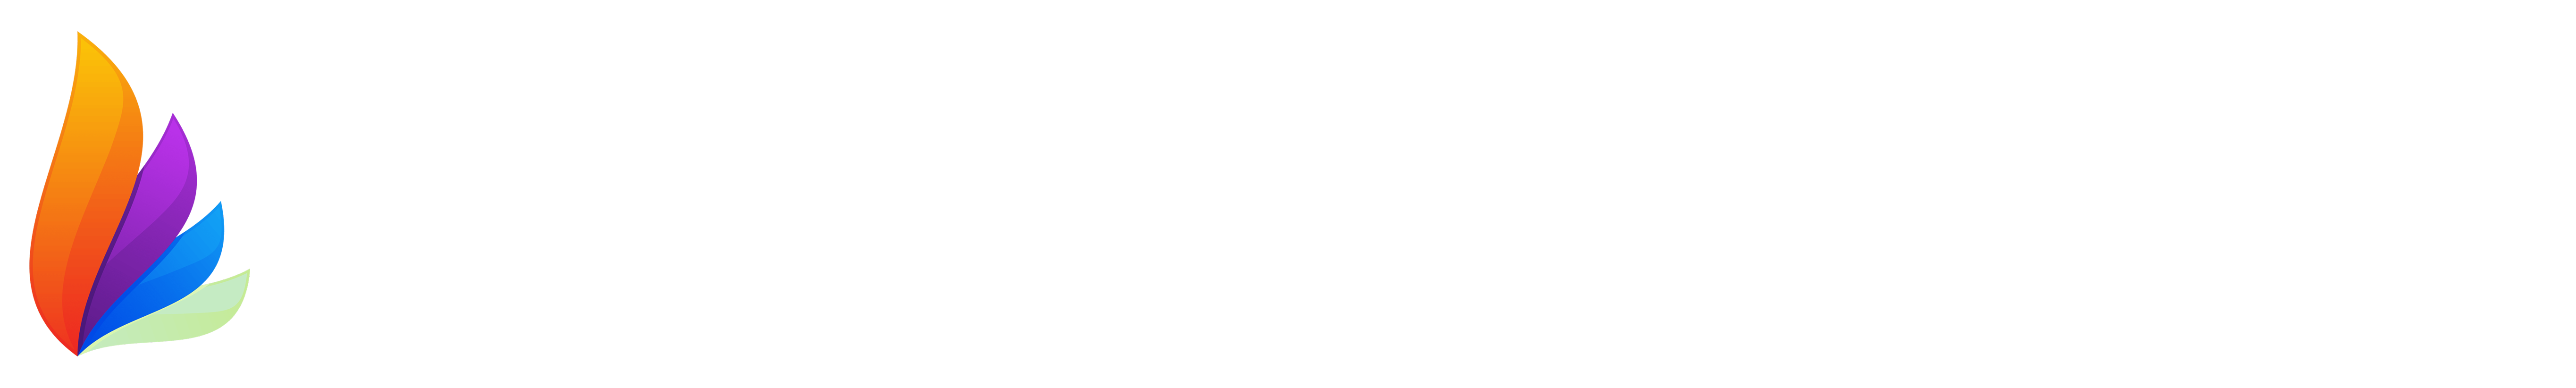 Kumru Group Logo